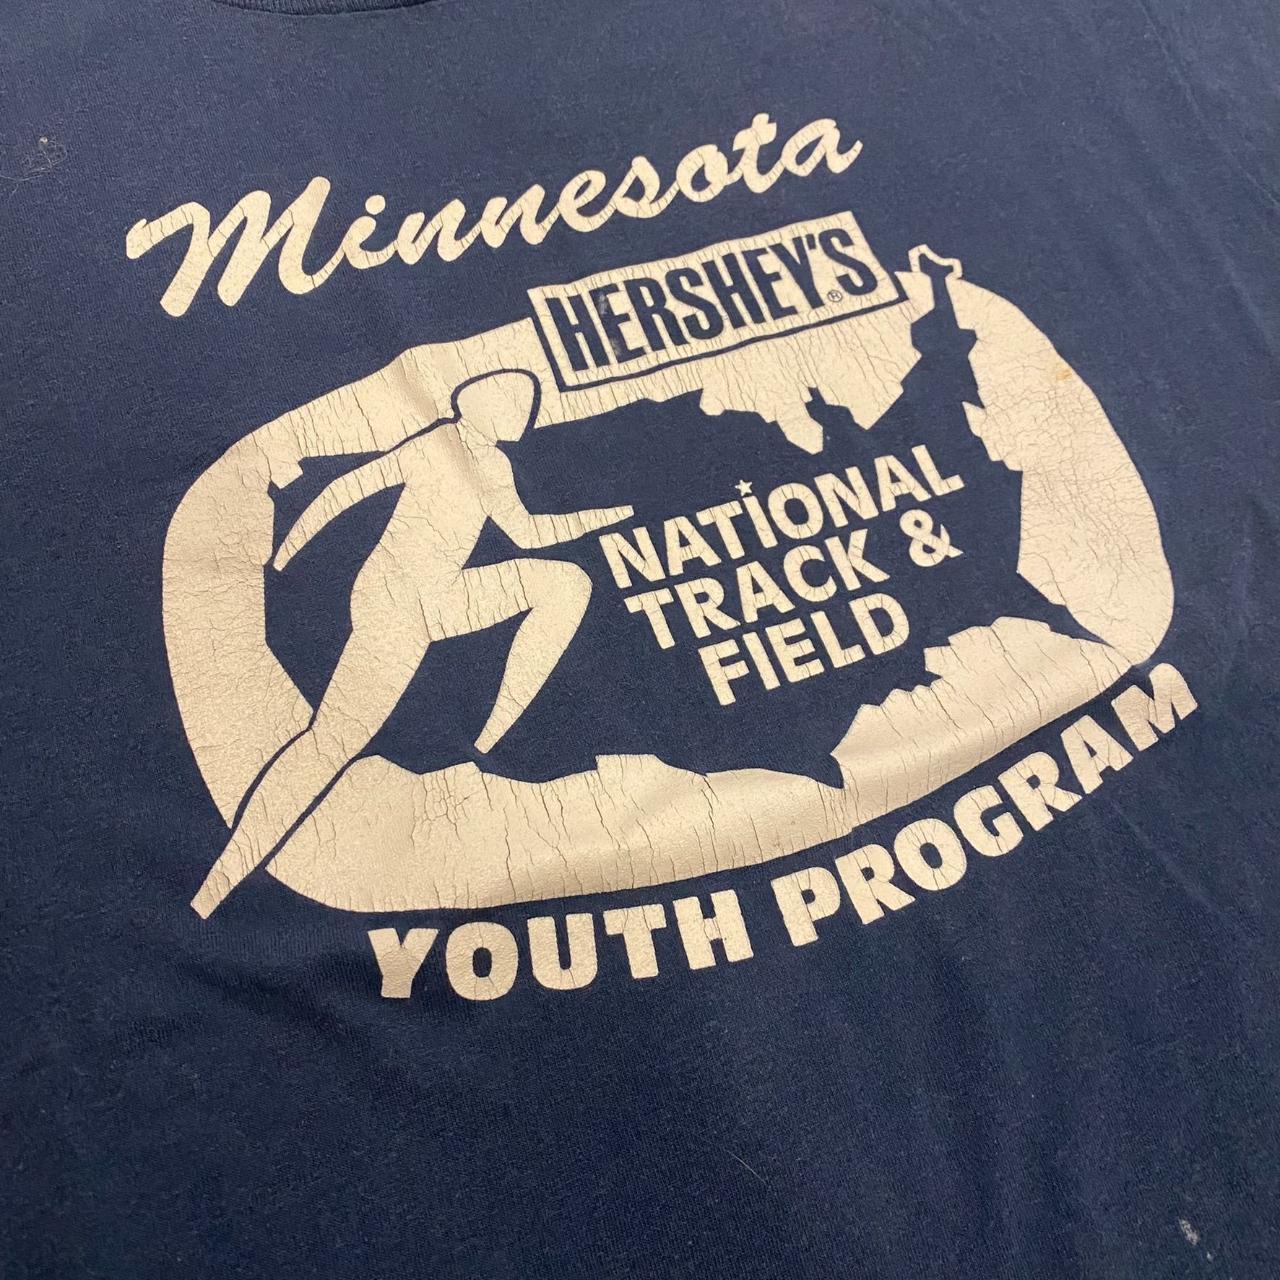 Product Image 2 - Hershey's Youth Program Vintage T-Shirt
Size: